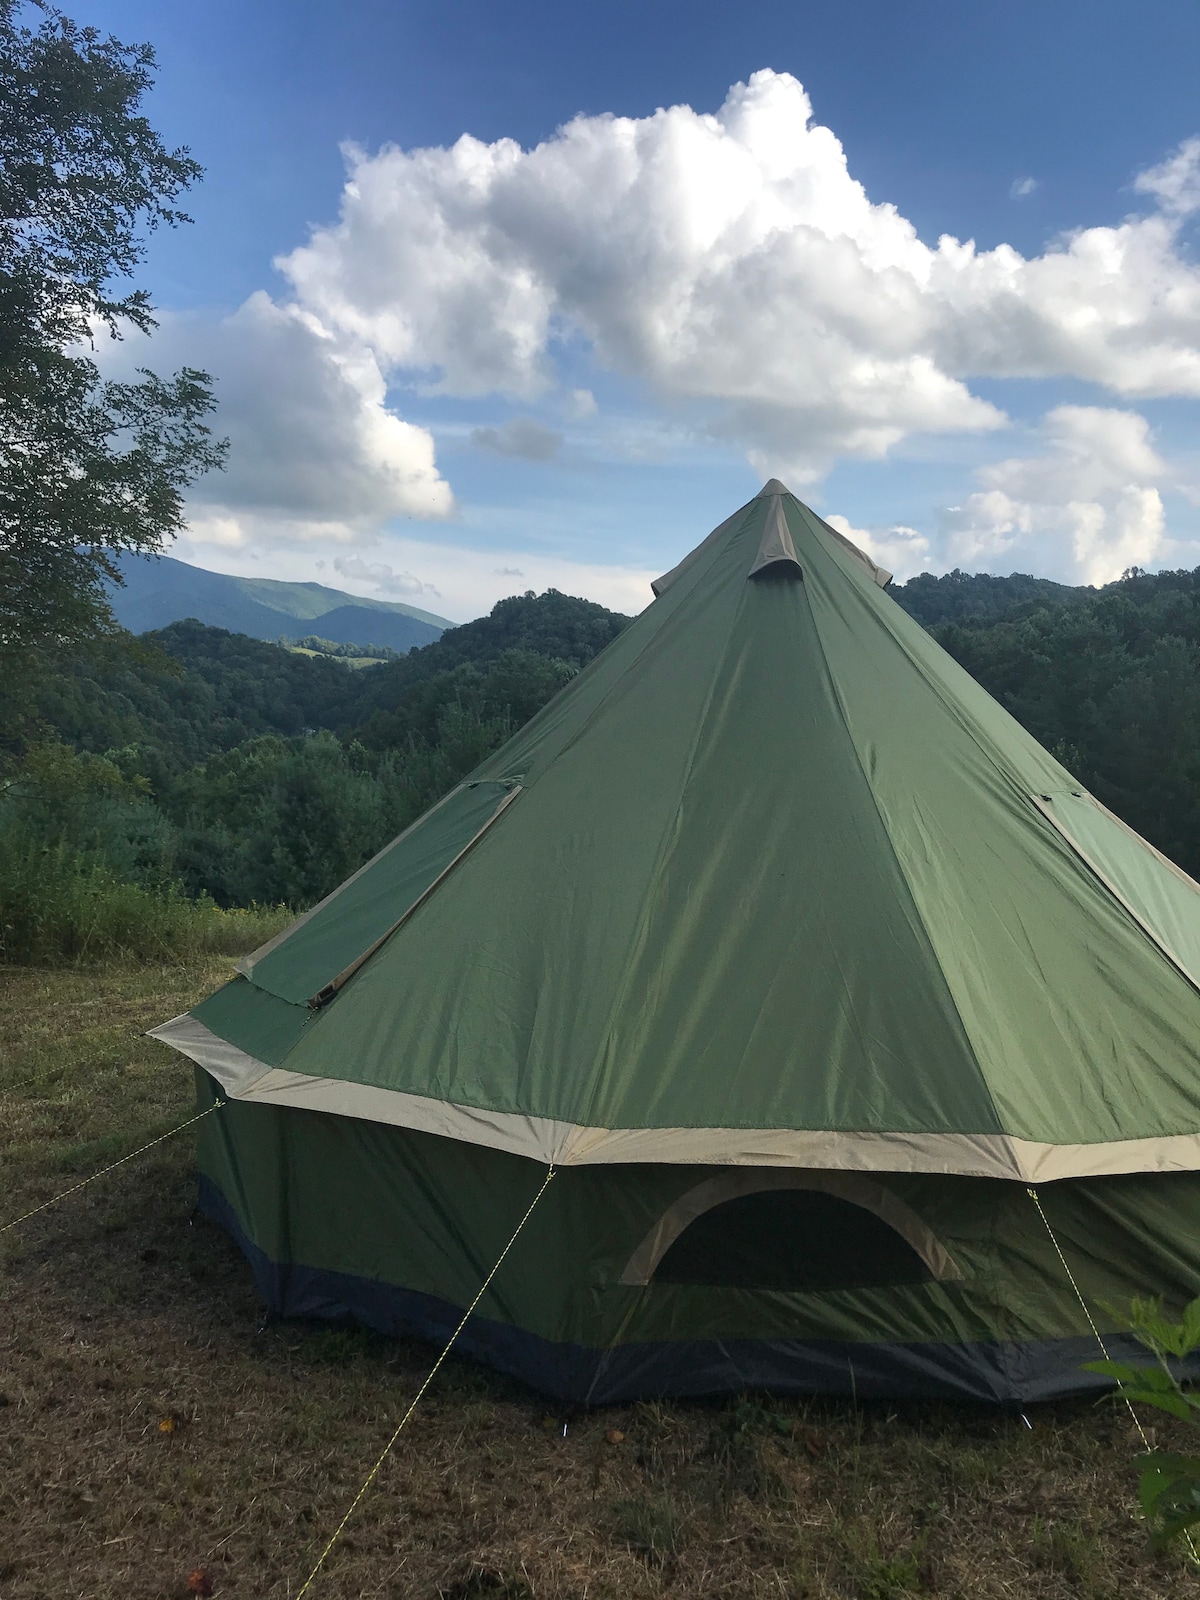 Boone 15 min Bell tent(s) Views!